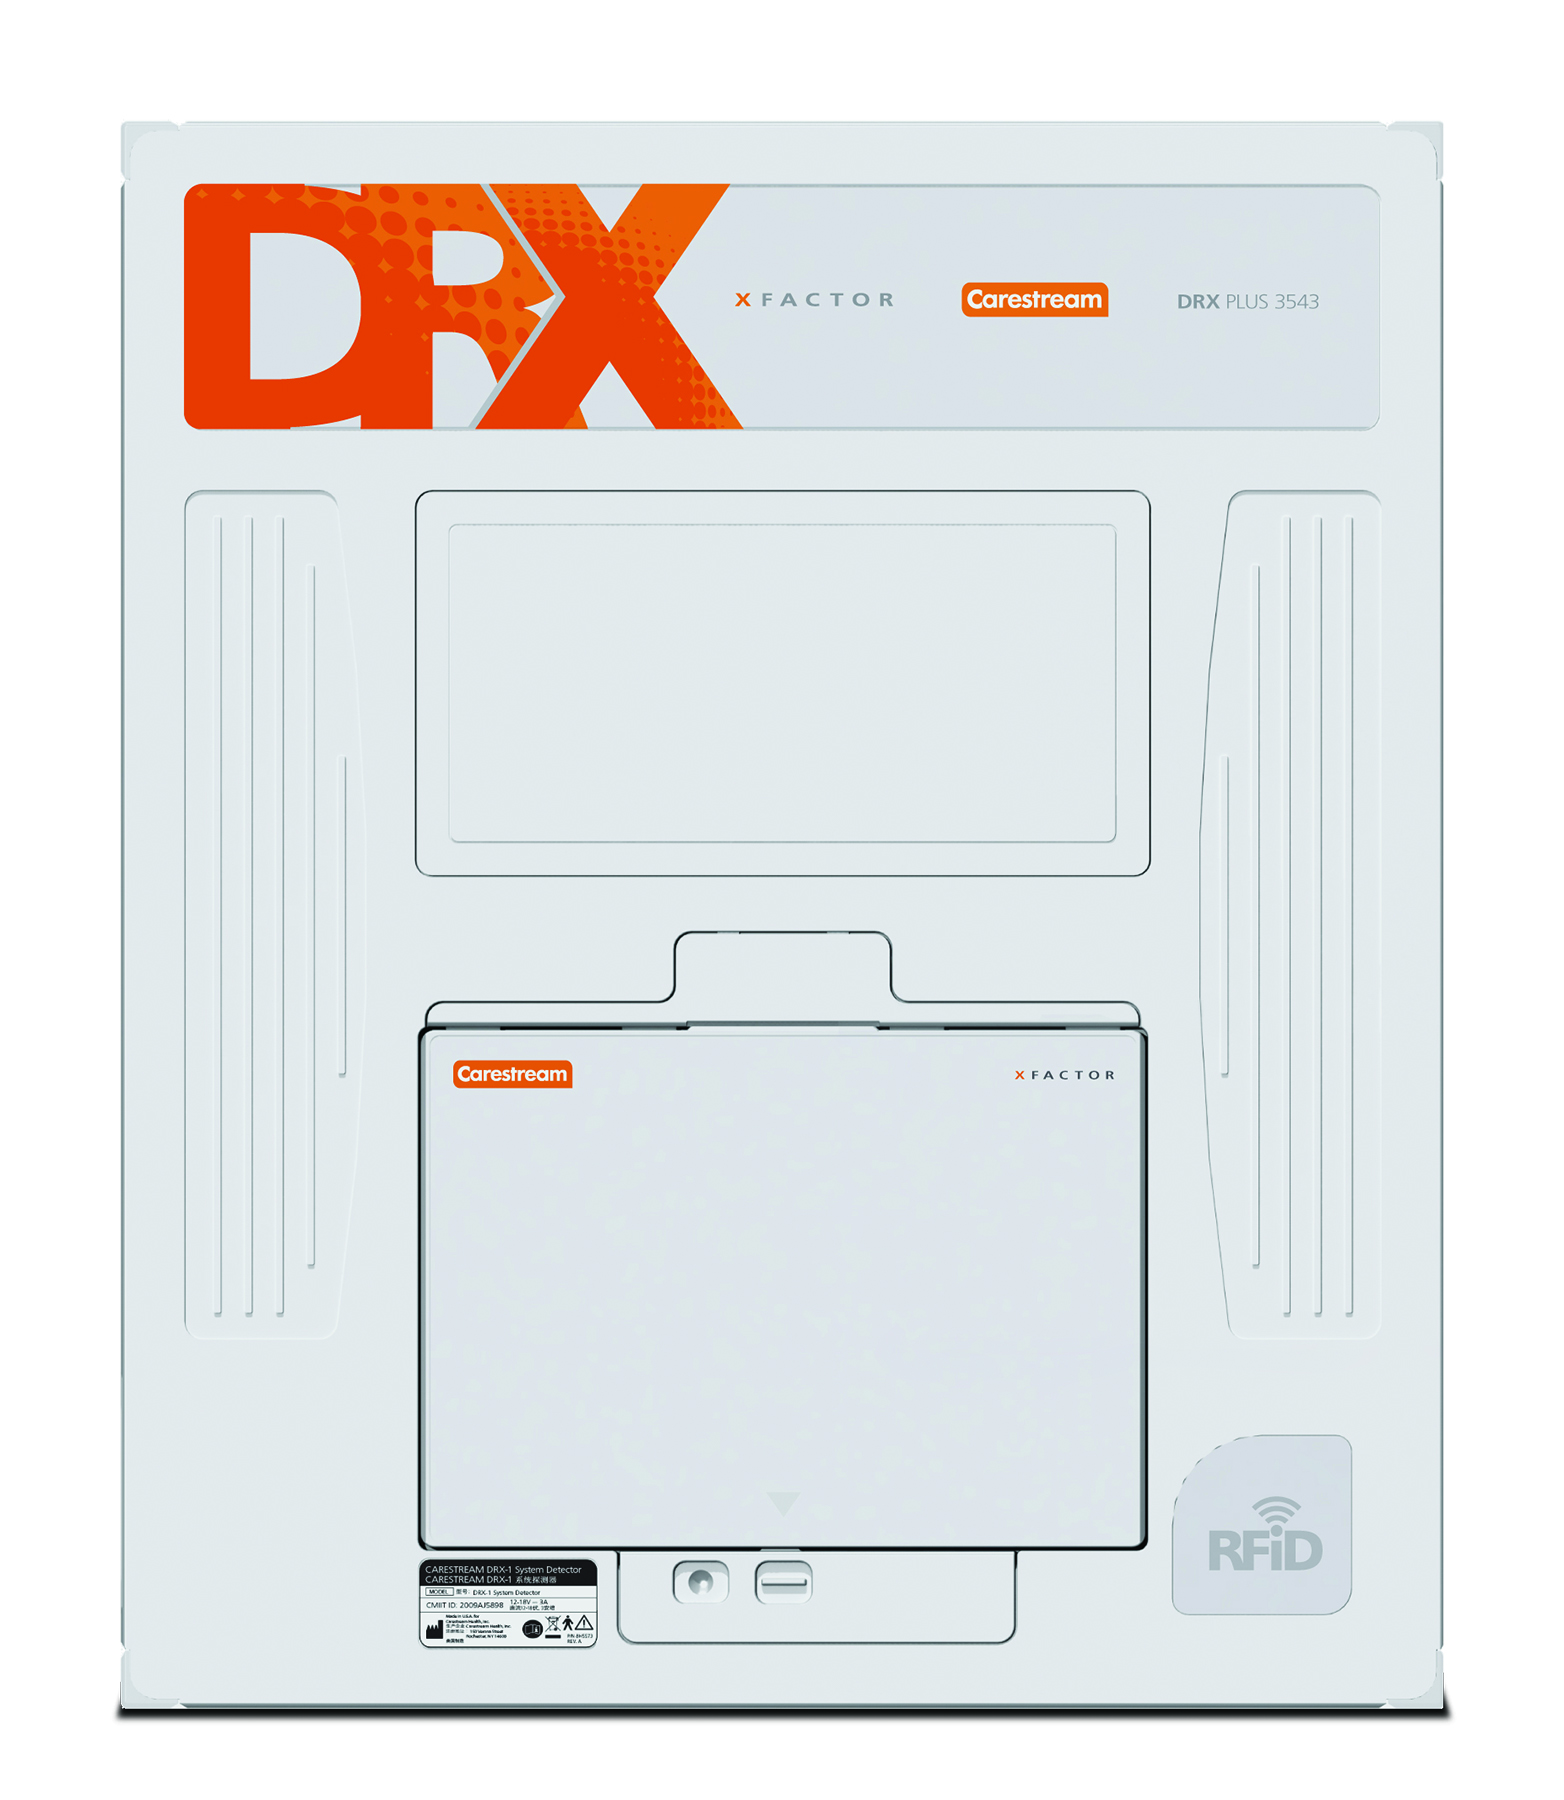 DRX Plus